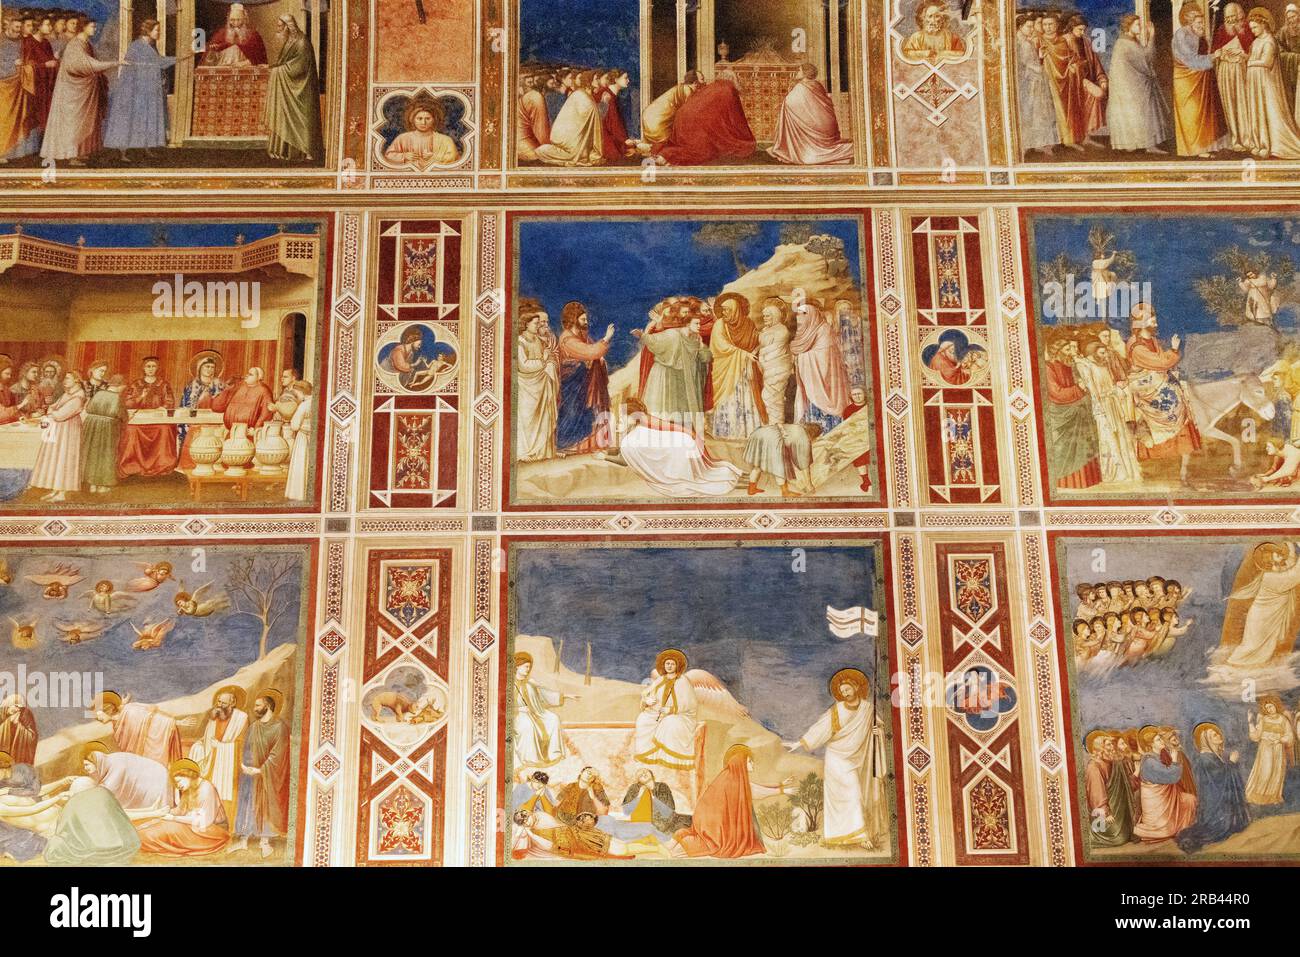 Giotto-Fresken, die Scrovegni-Kapelle, Padua Italien - italienische Renaissance-Gemälde des Lebens Christi aus dem 14. Jahrhundert; Musei Civici di Padova Stockfoto